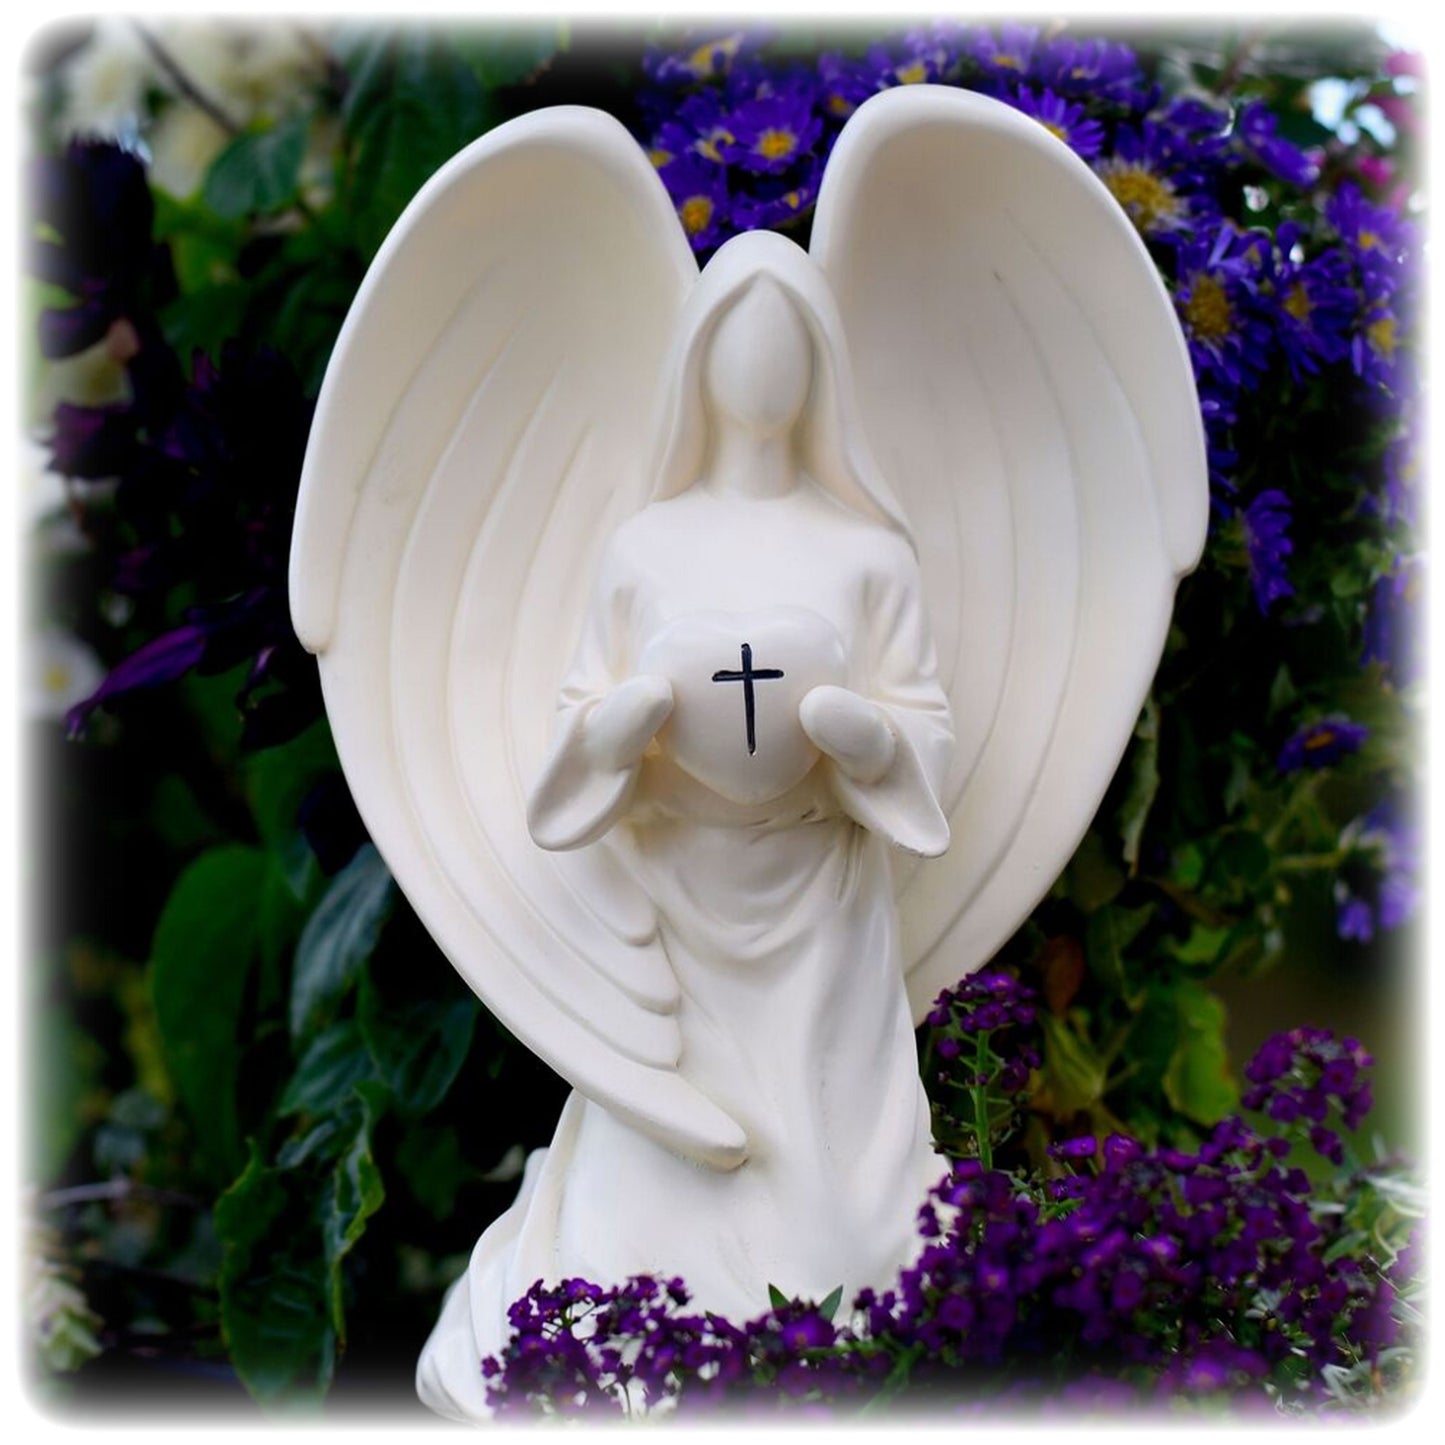 Christian Garden Gift Idea - Solar Powered Angel Statue